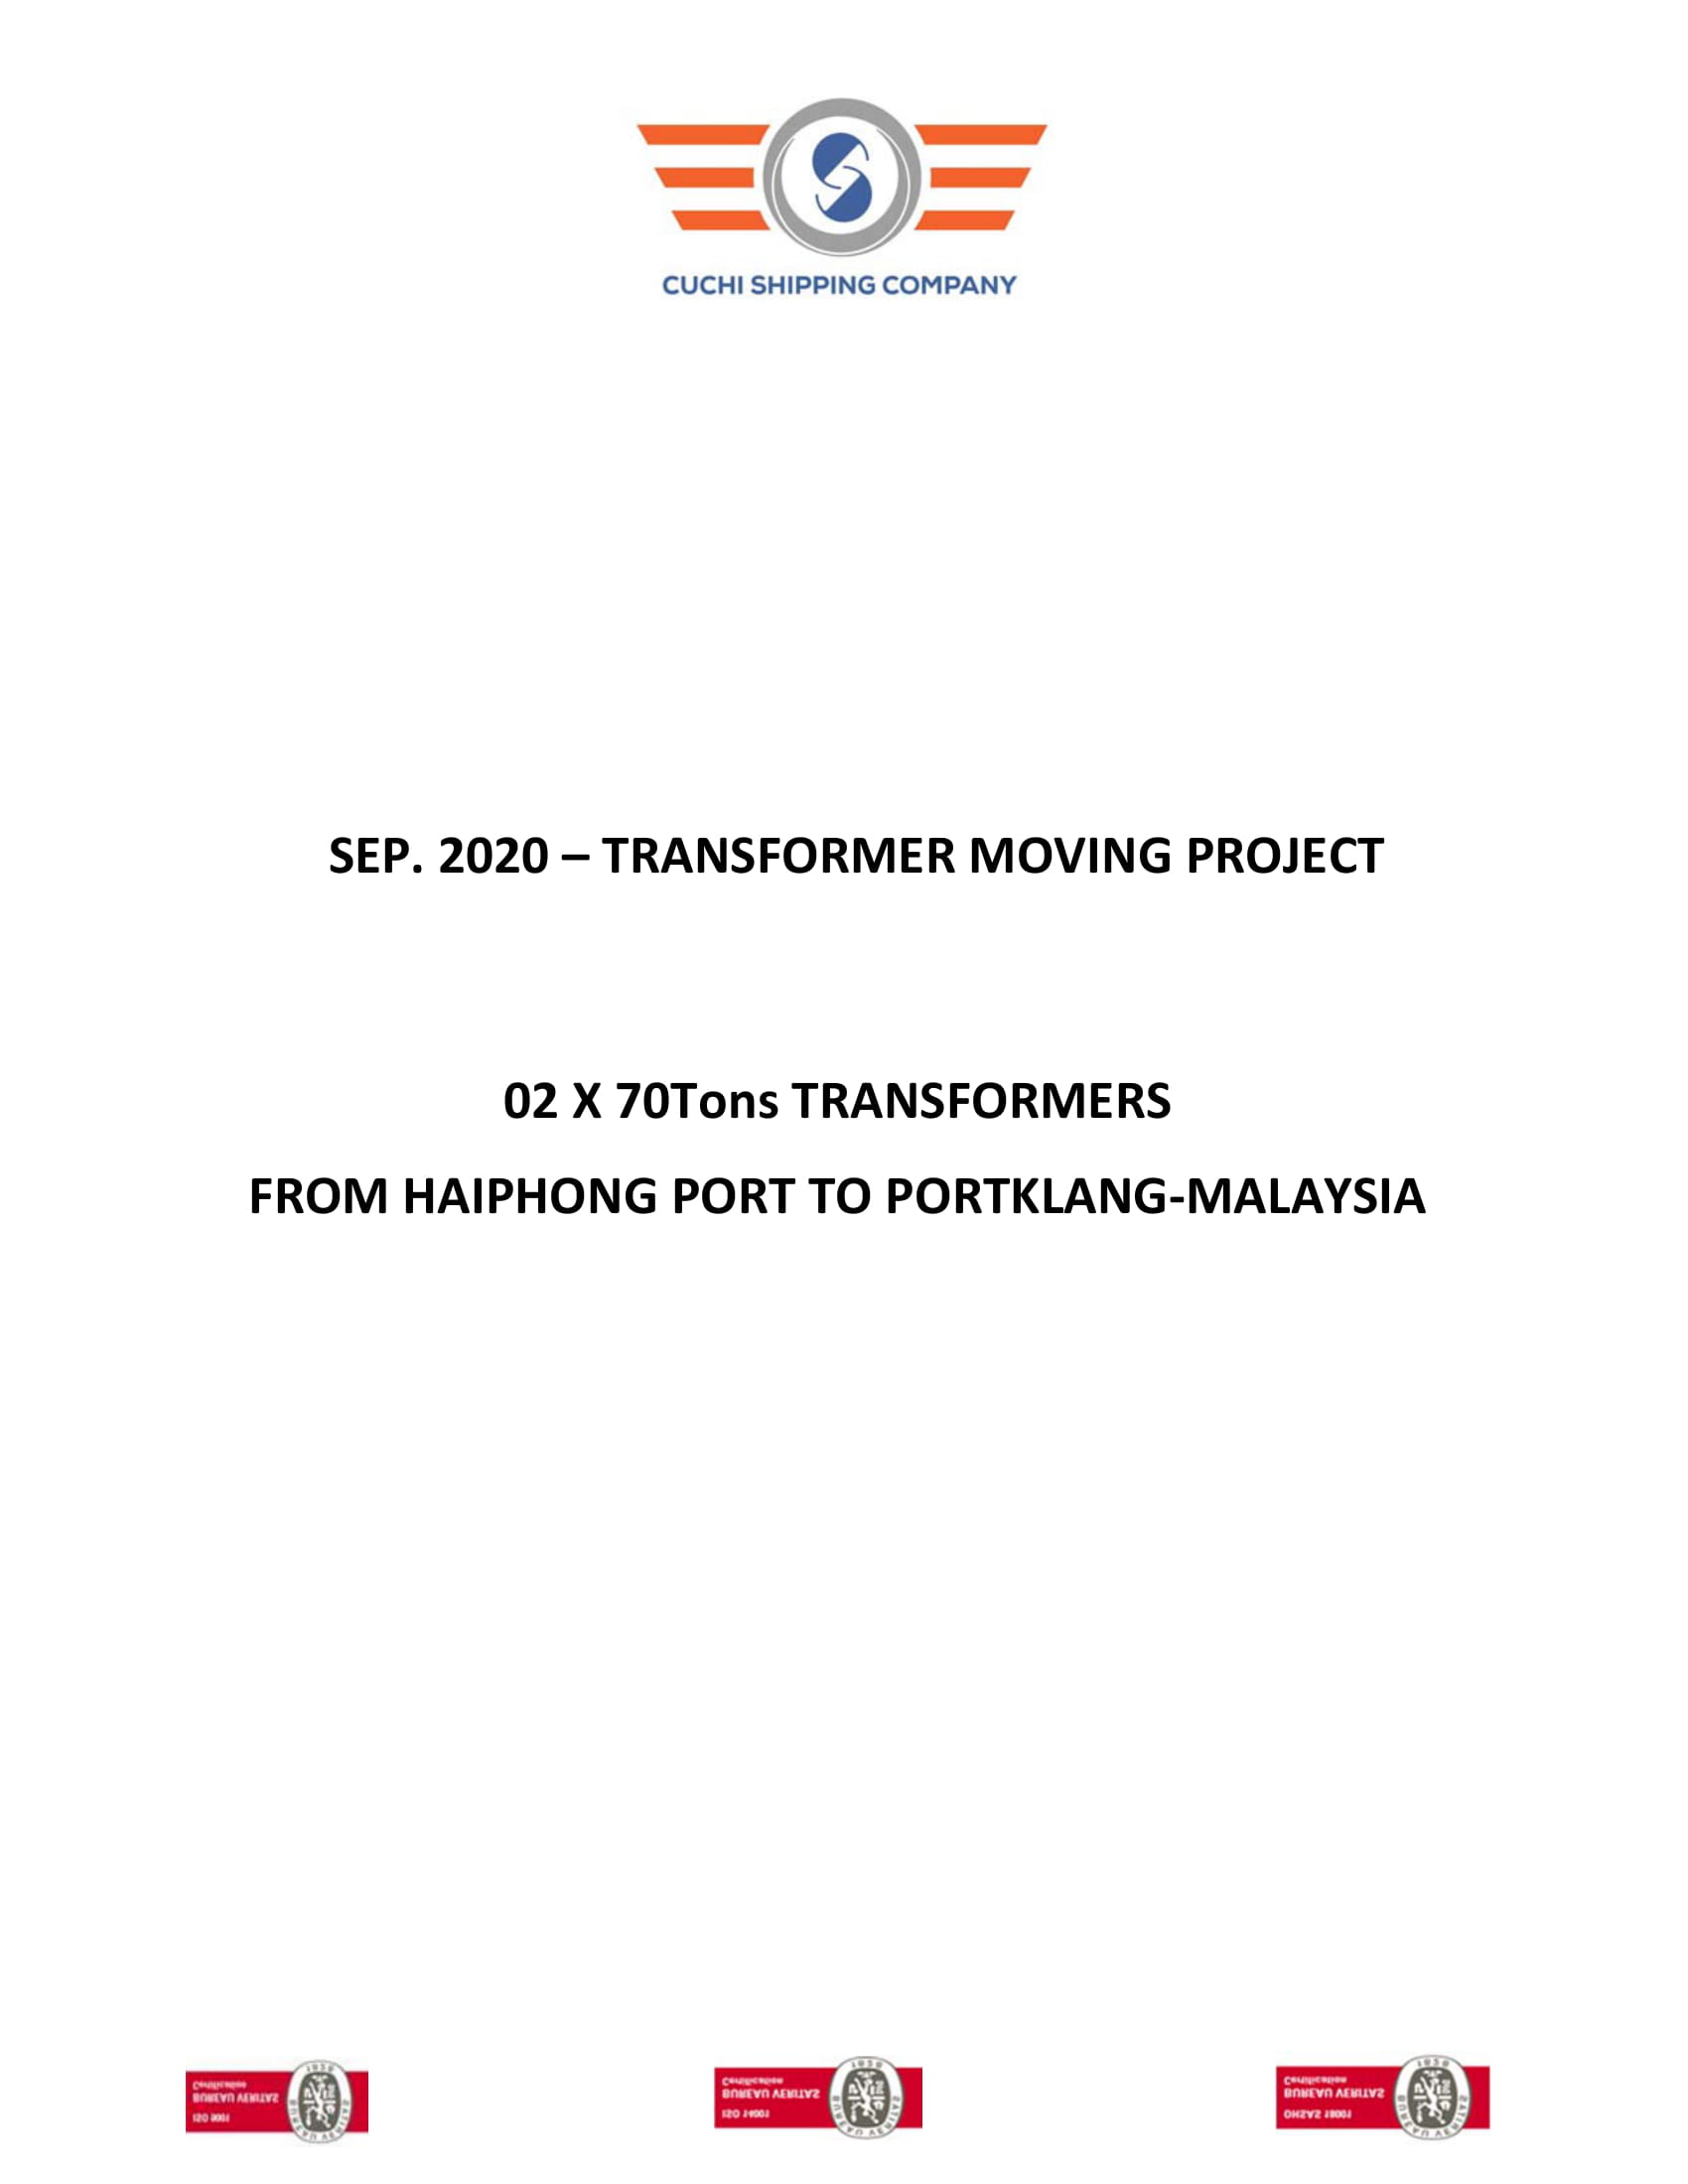 SEP-2020-TRANSPORT-TRANSFORMER-PROJECT-1.jpg